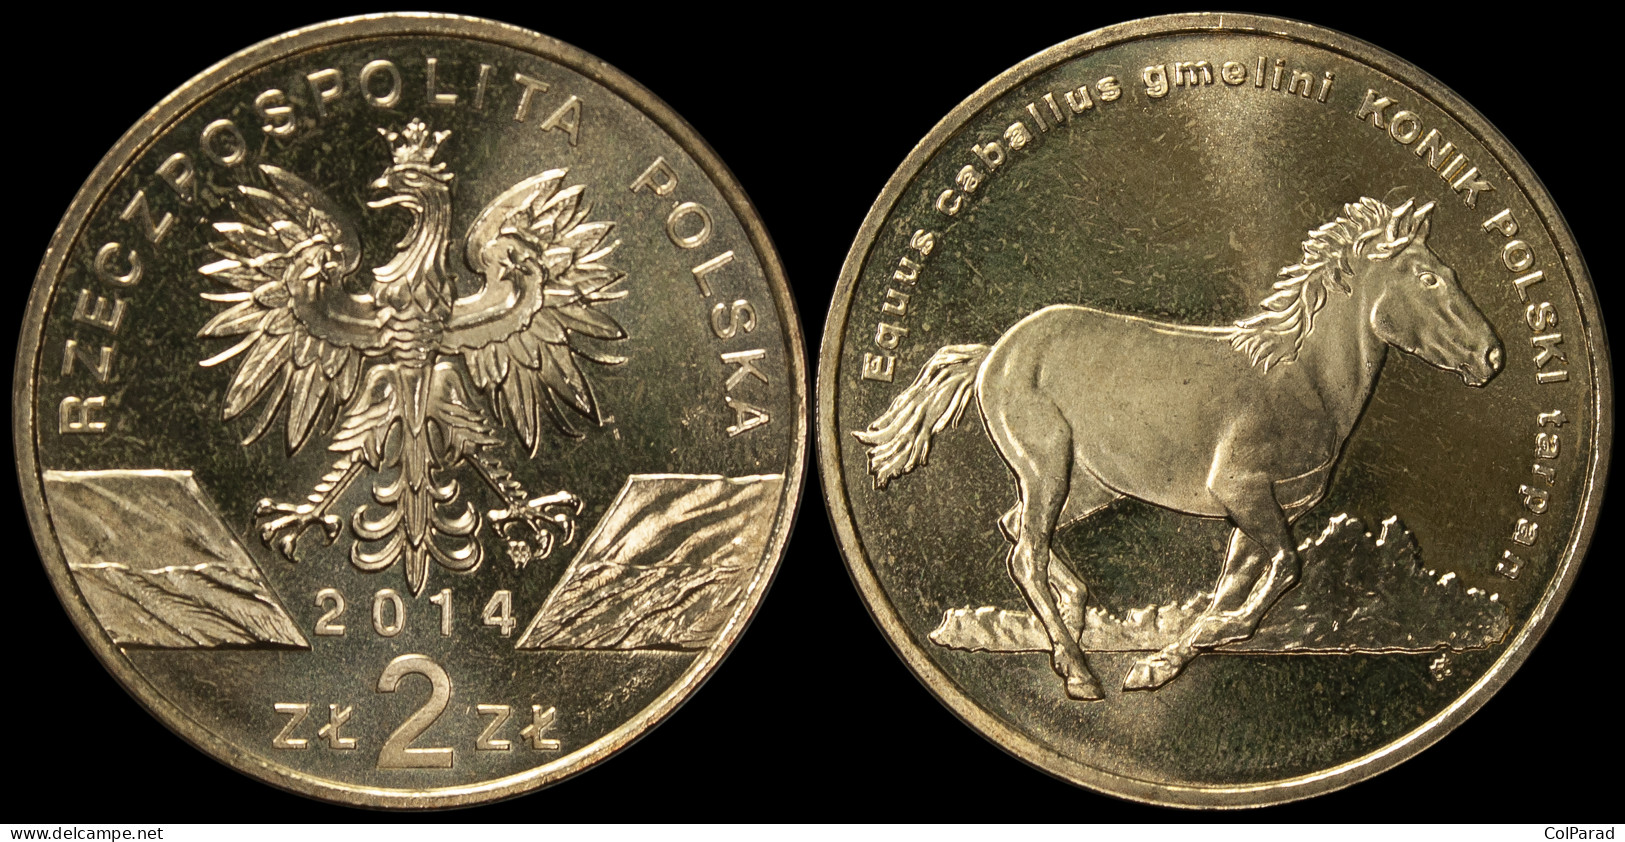 POLAND COIN 2 ZLOTY - KM#Y.896 Unc - 2014 - Polish Konik Horse - Pologne